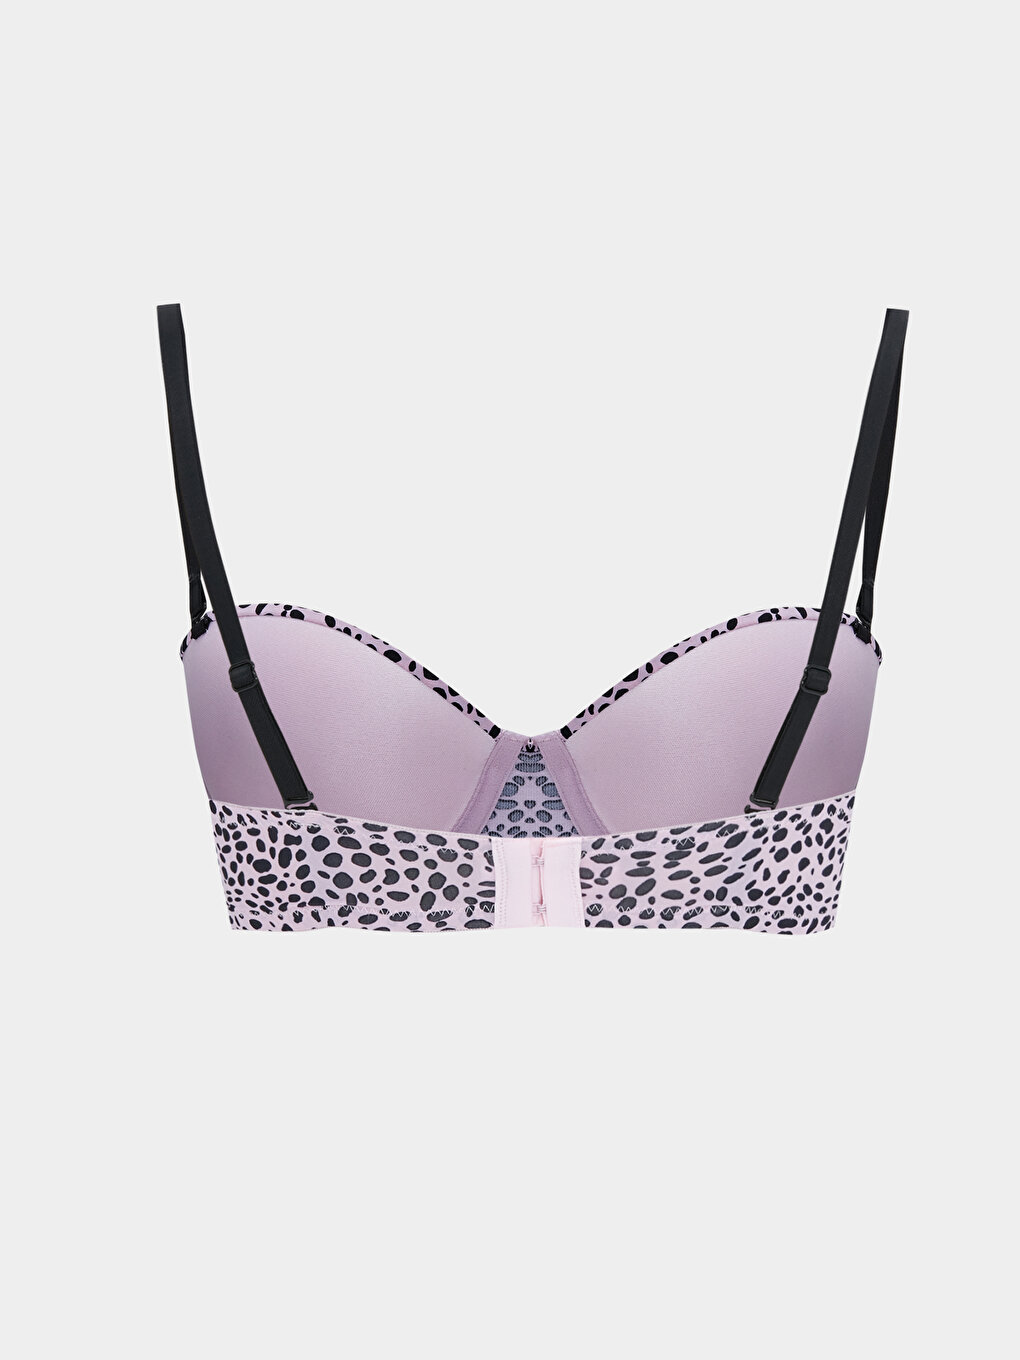 Victoria’s Secret push up strapless bra pink and cheetah